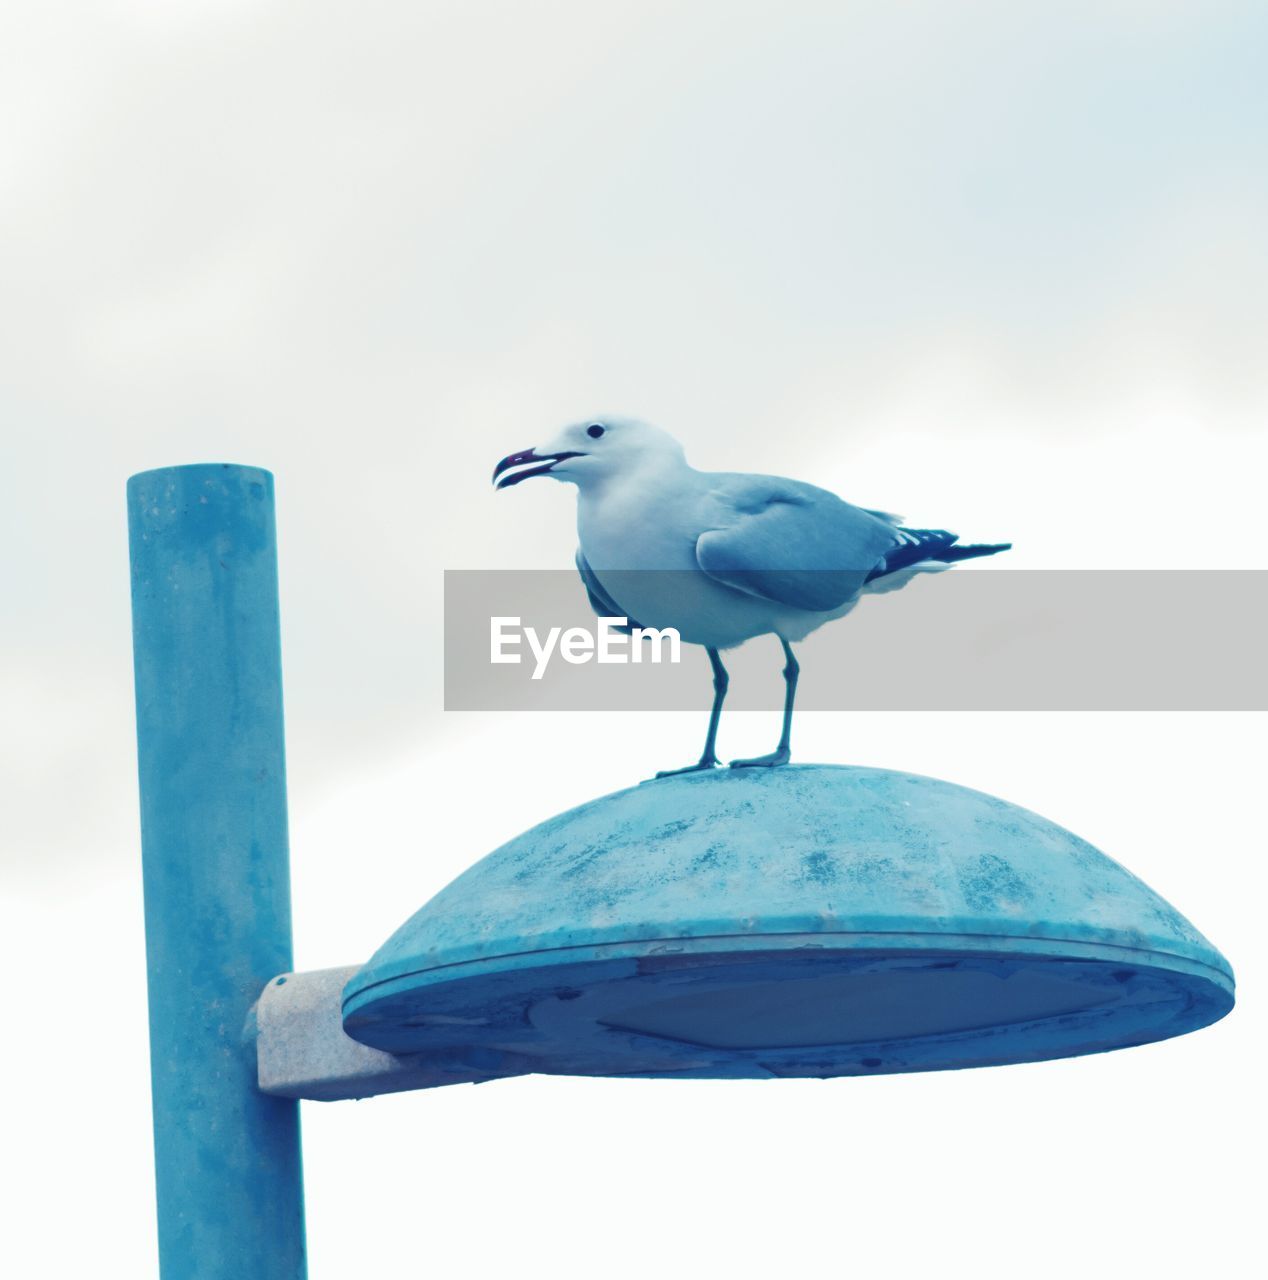 Seagull perching on street light